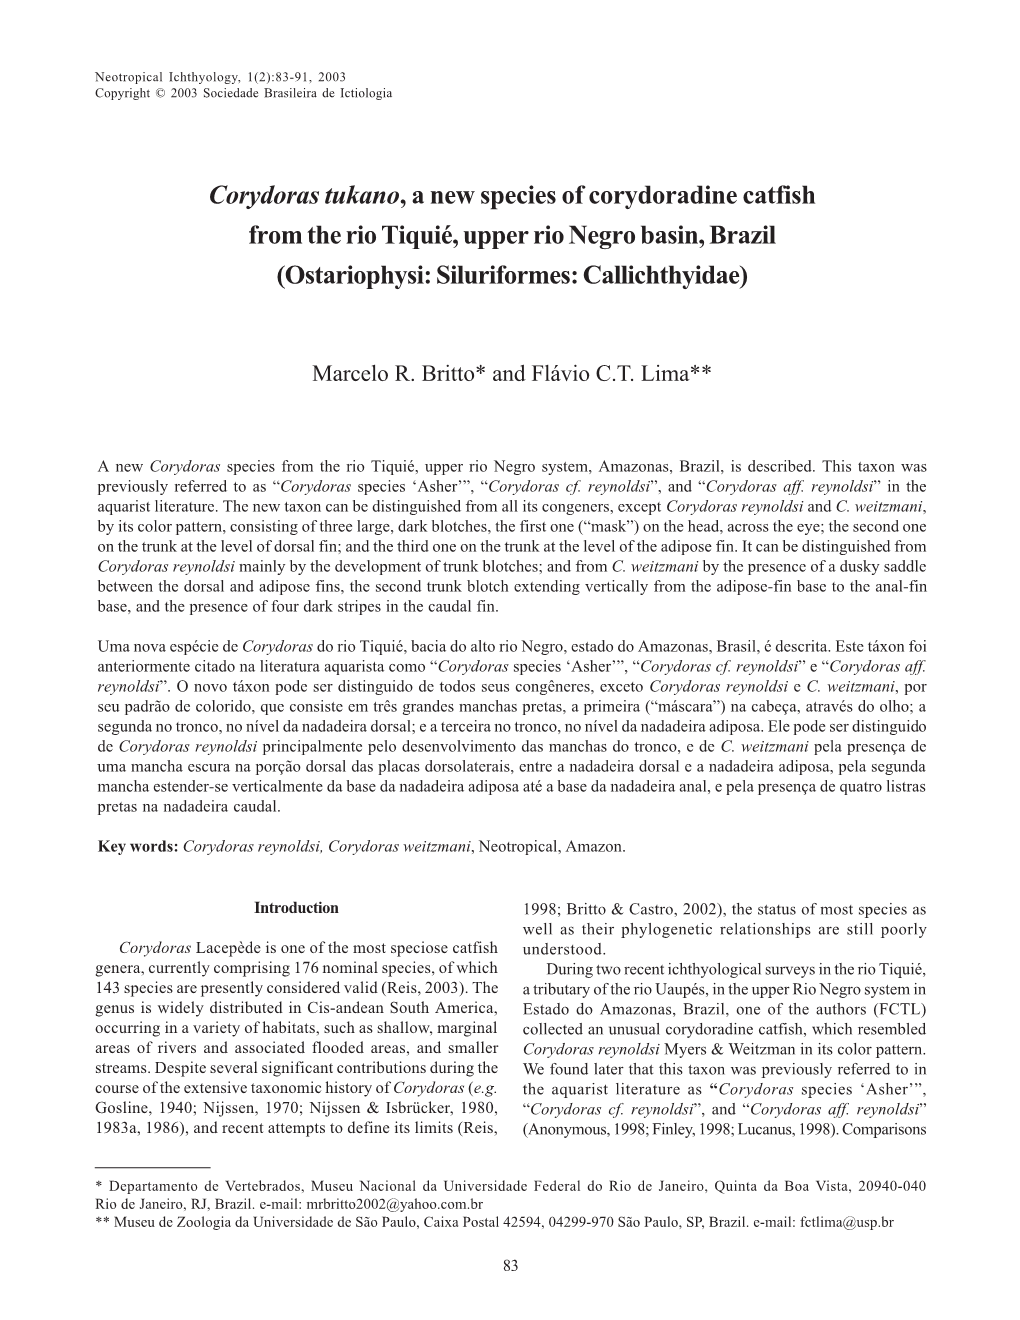 Corydoras Tukano, a New Species of Corydoradine Catfish from the Rio Tiquié, Upper Rio Negro Basin, Brazil (Ostariophysi: Siluriformes: Callichthyidae)